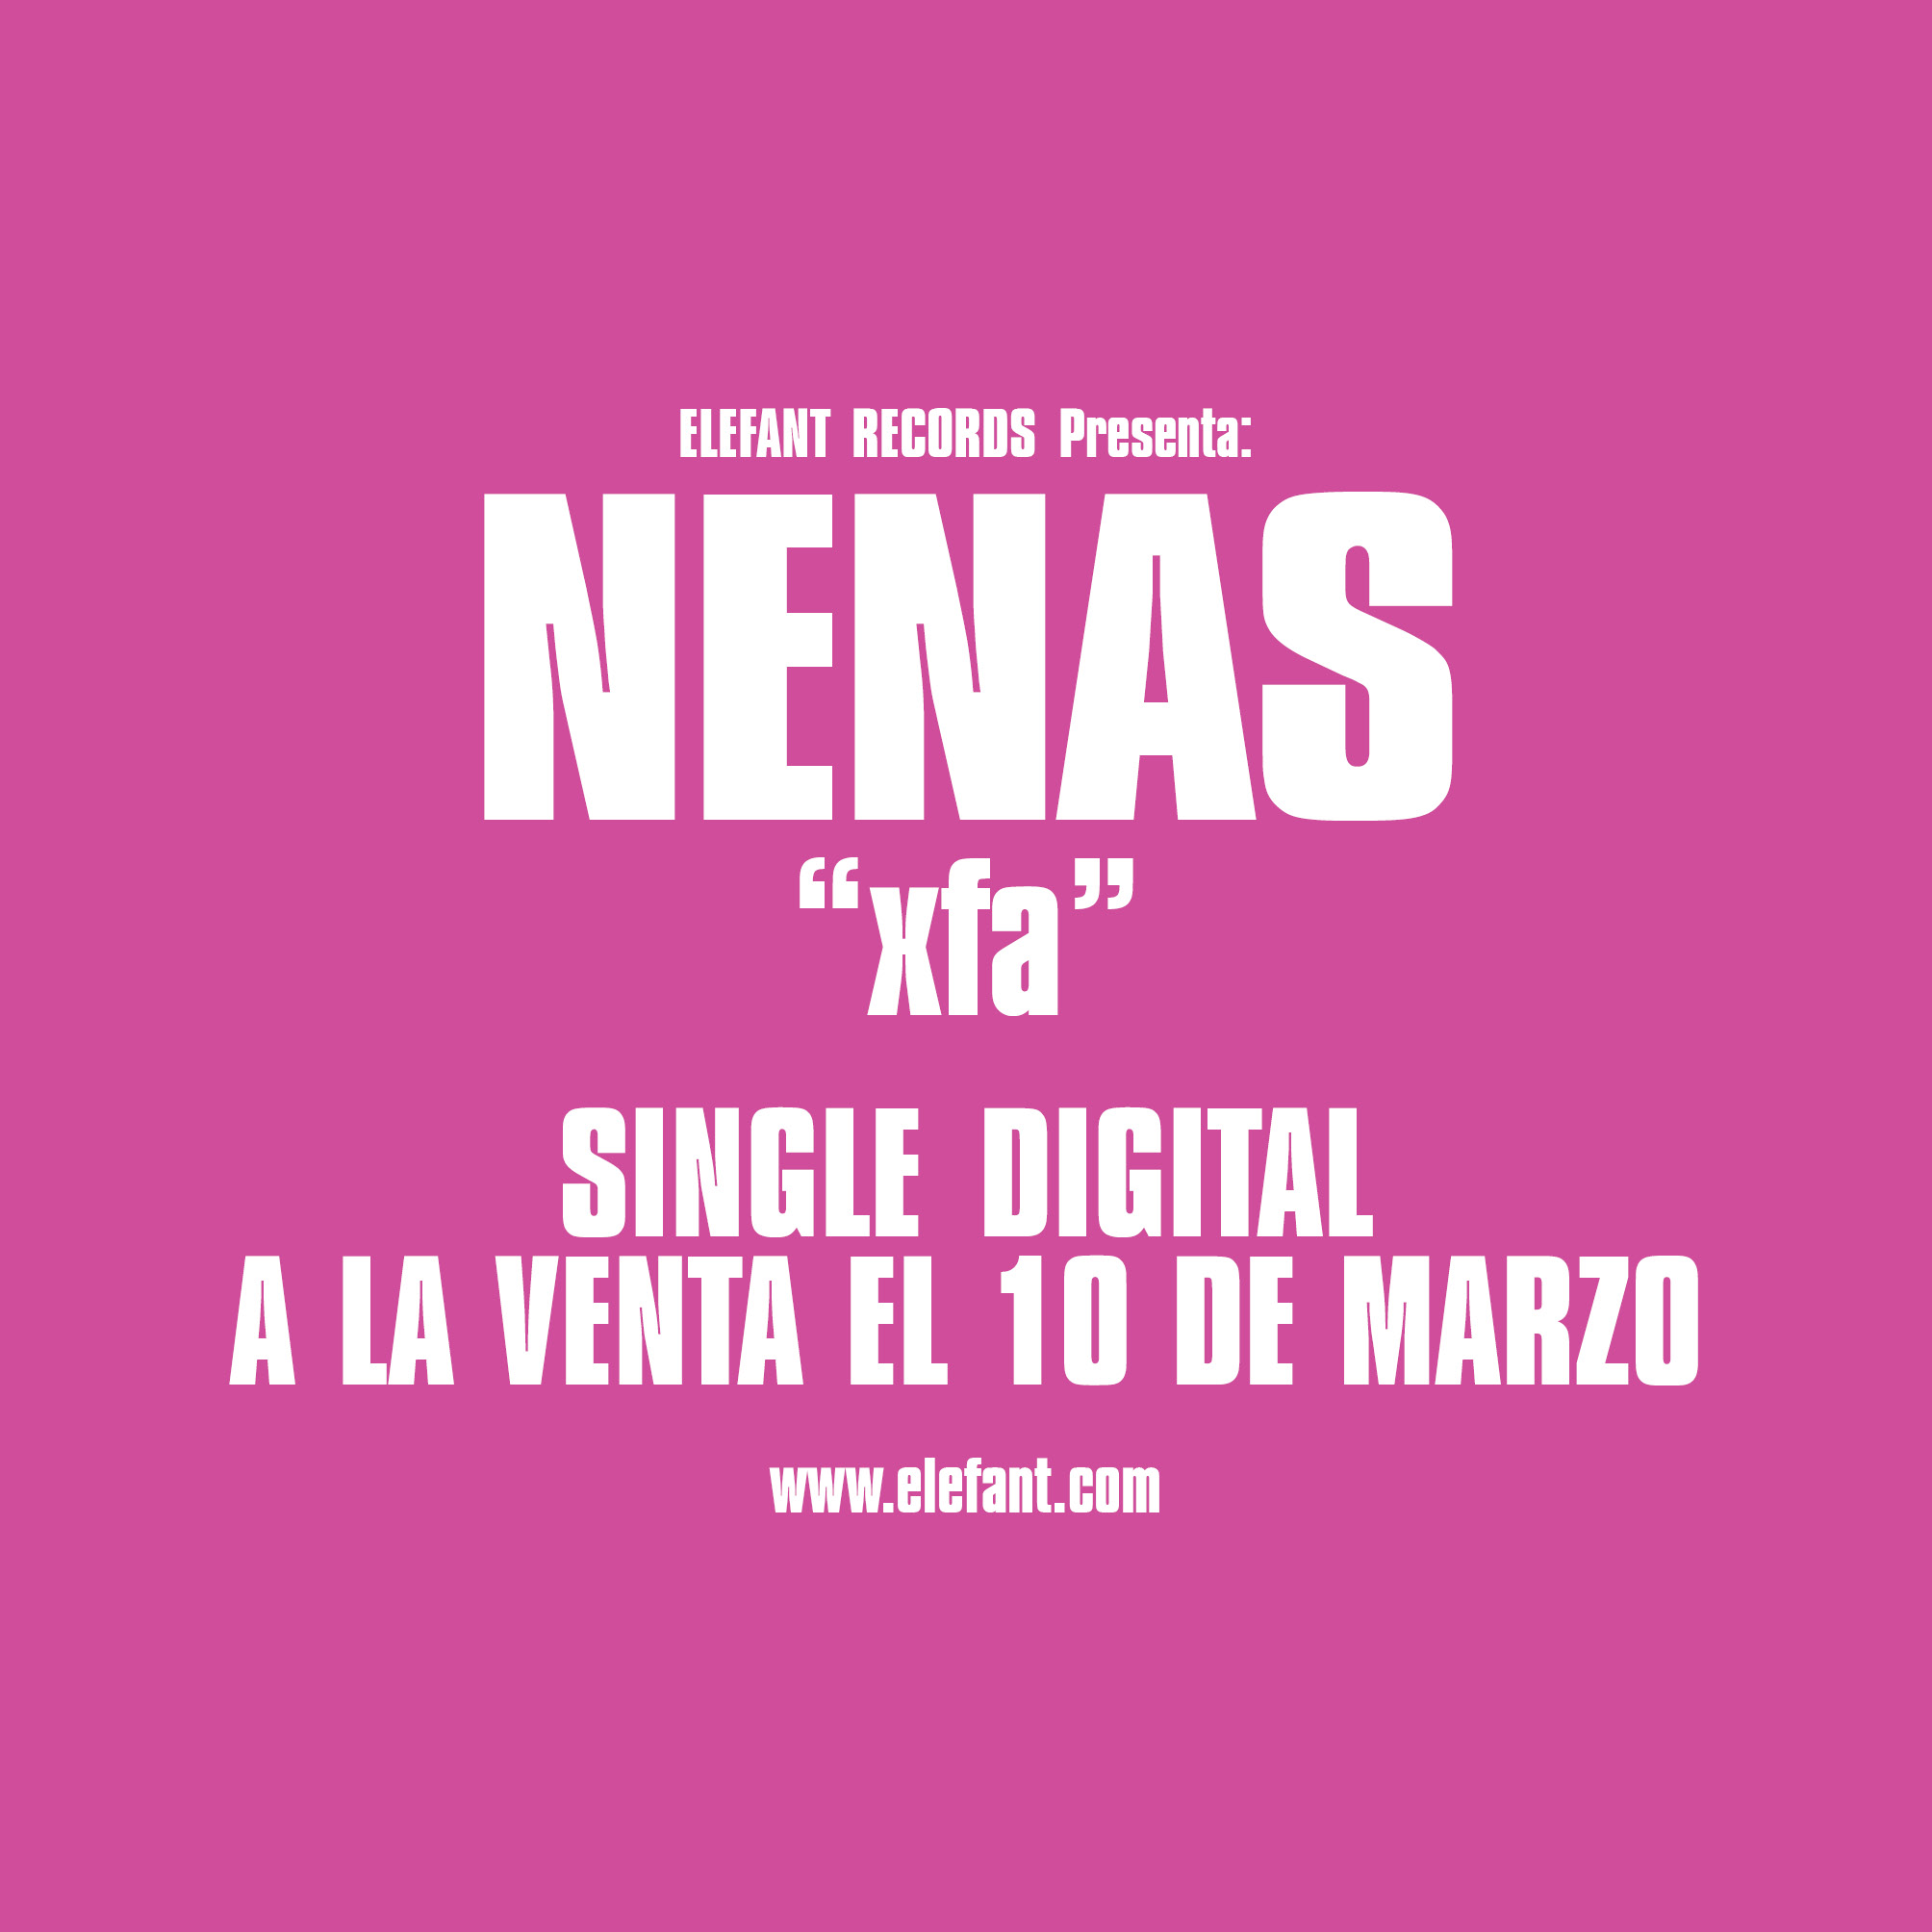 NENAS "xfa" Single Digital 